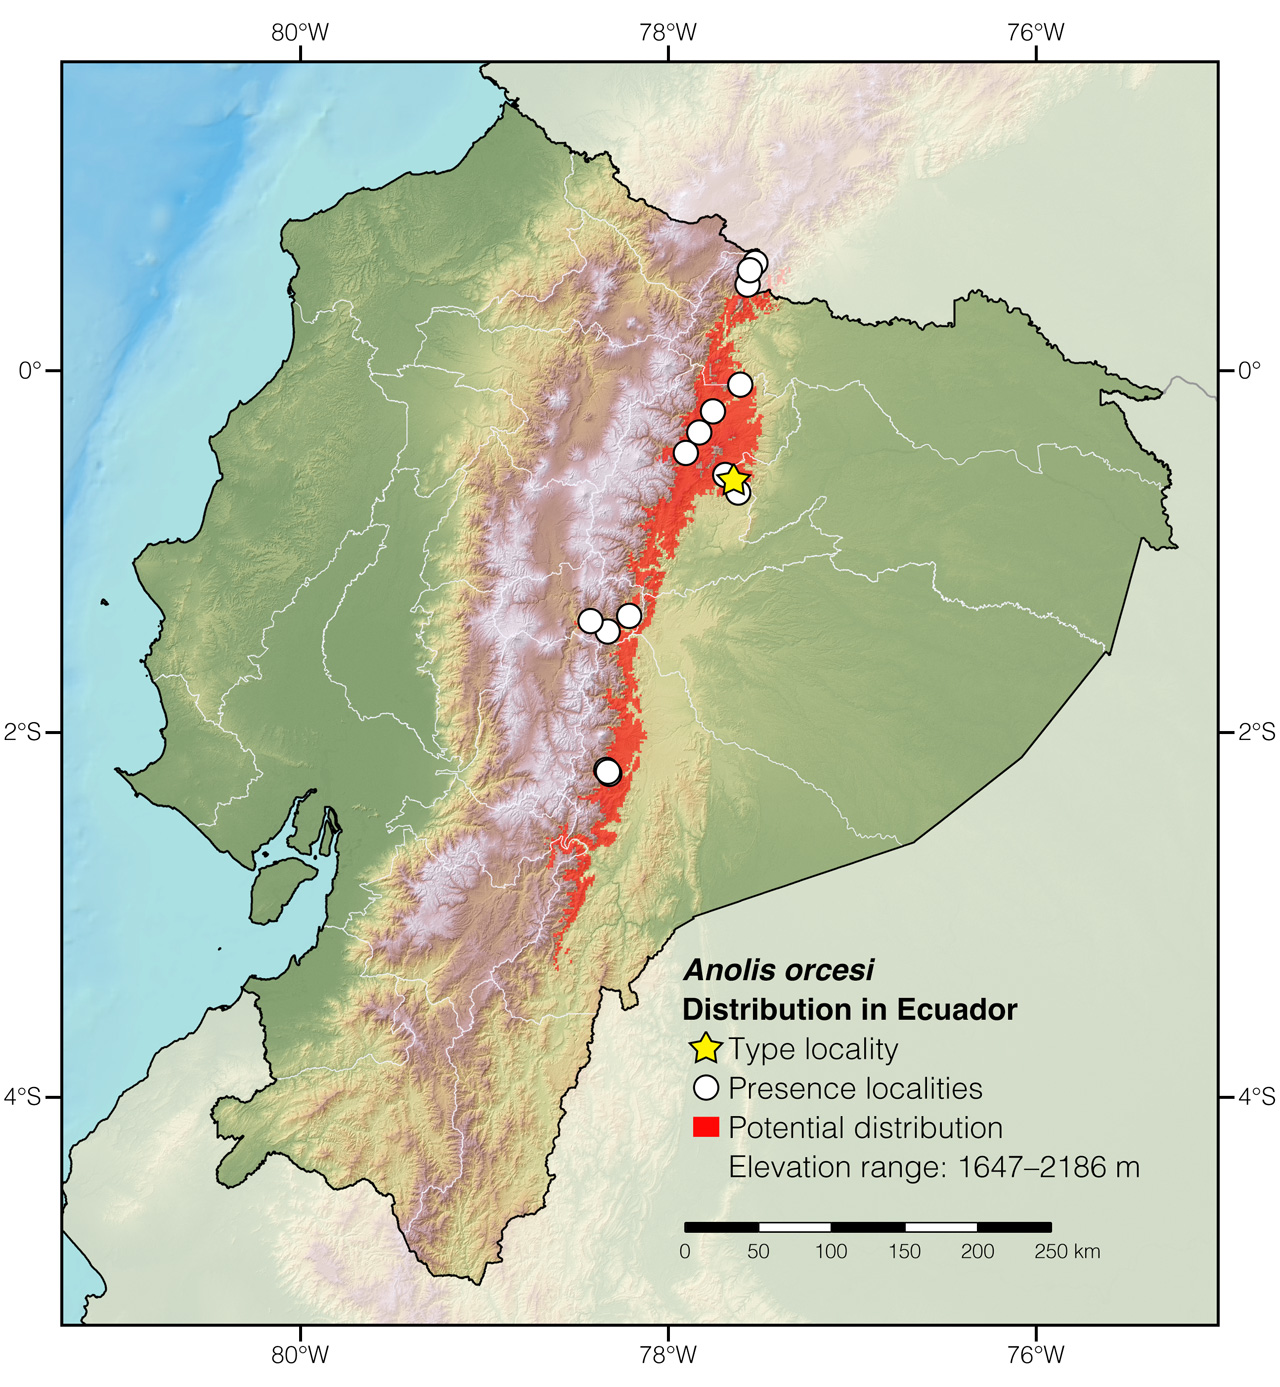 Distribution of Anolis orcesi in Ecuador